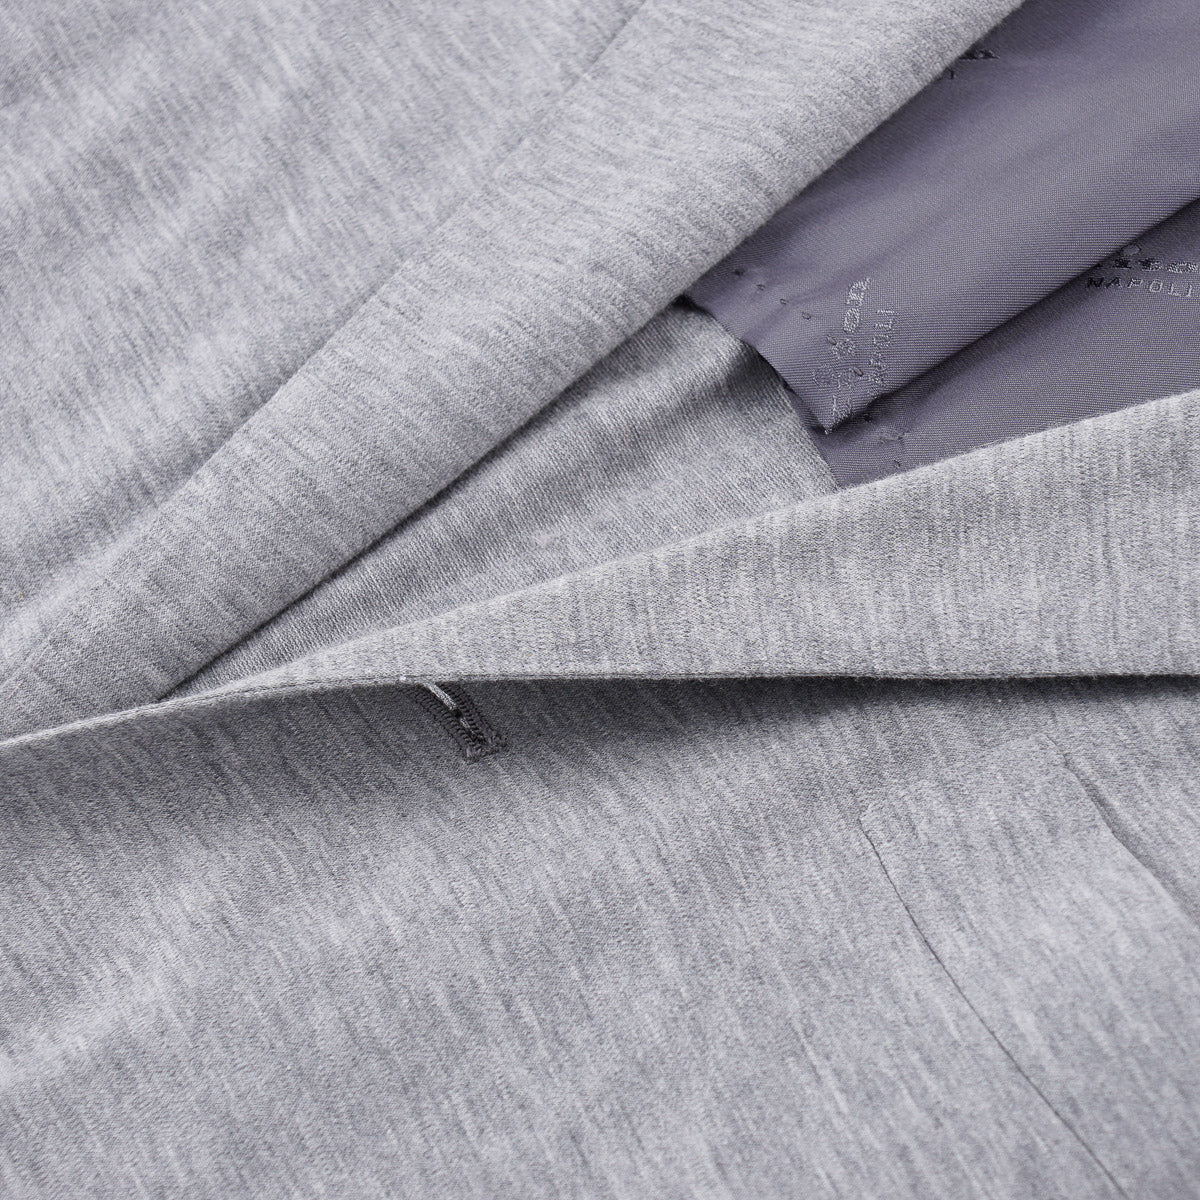 Kiton Soft Jersey Cotton Sport Coat - Top Shelf Apparel